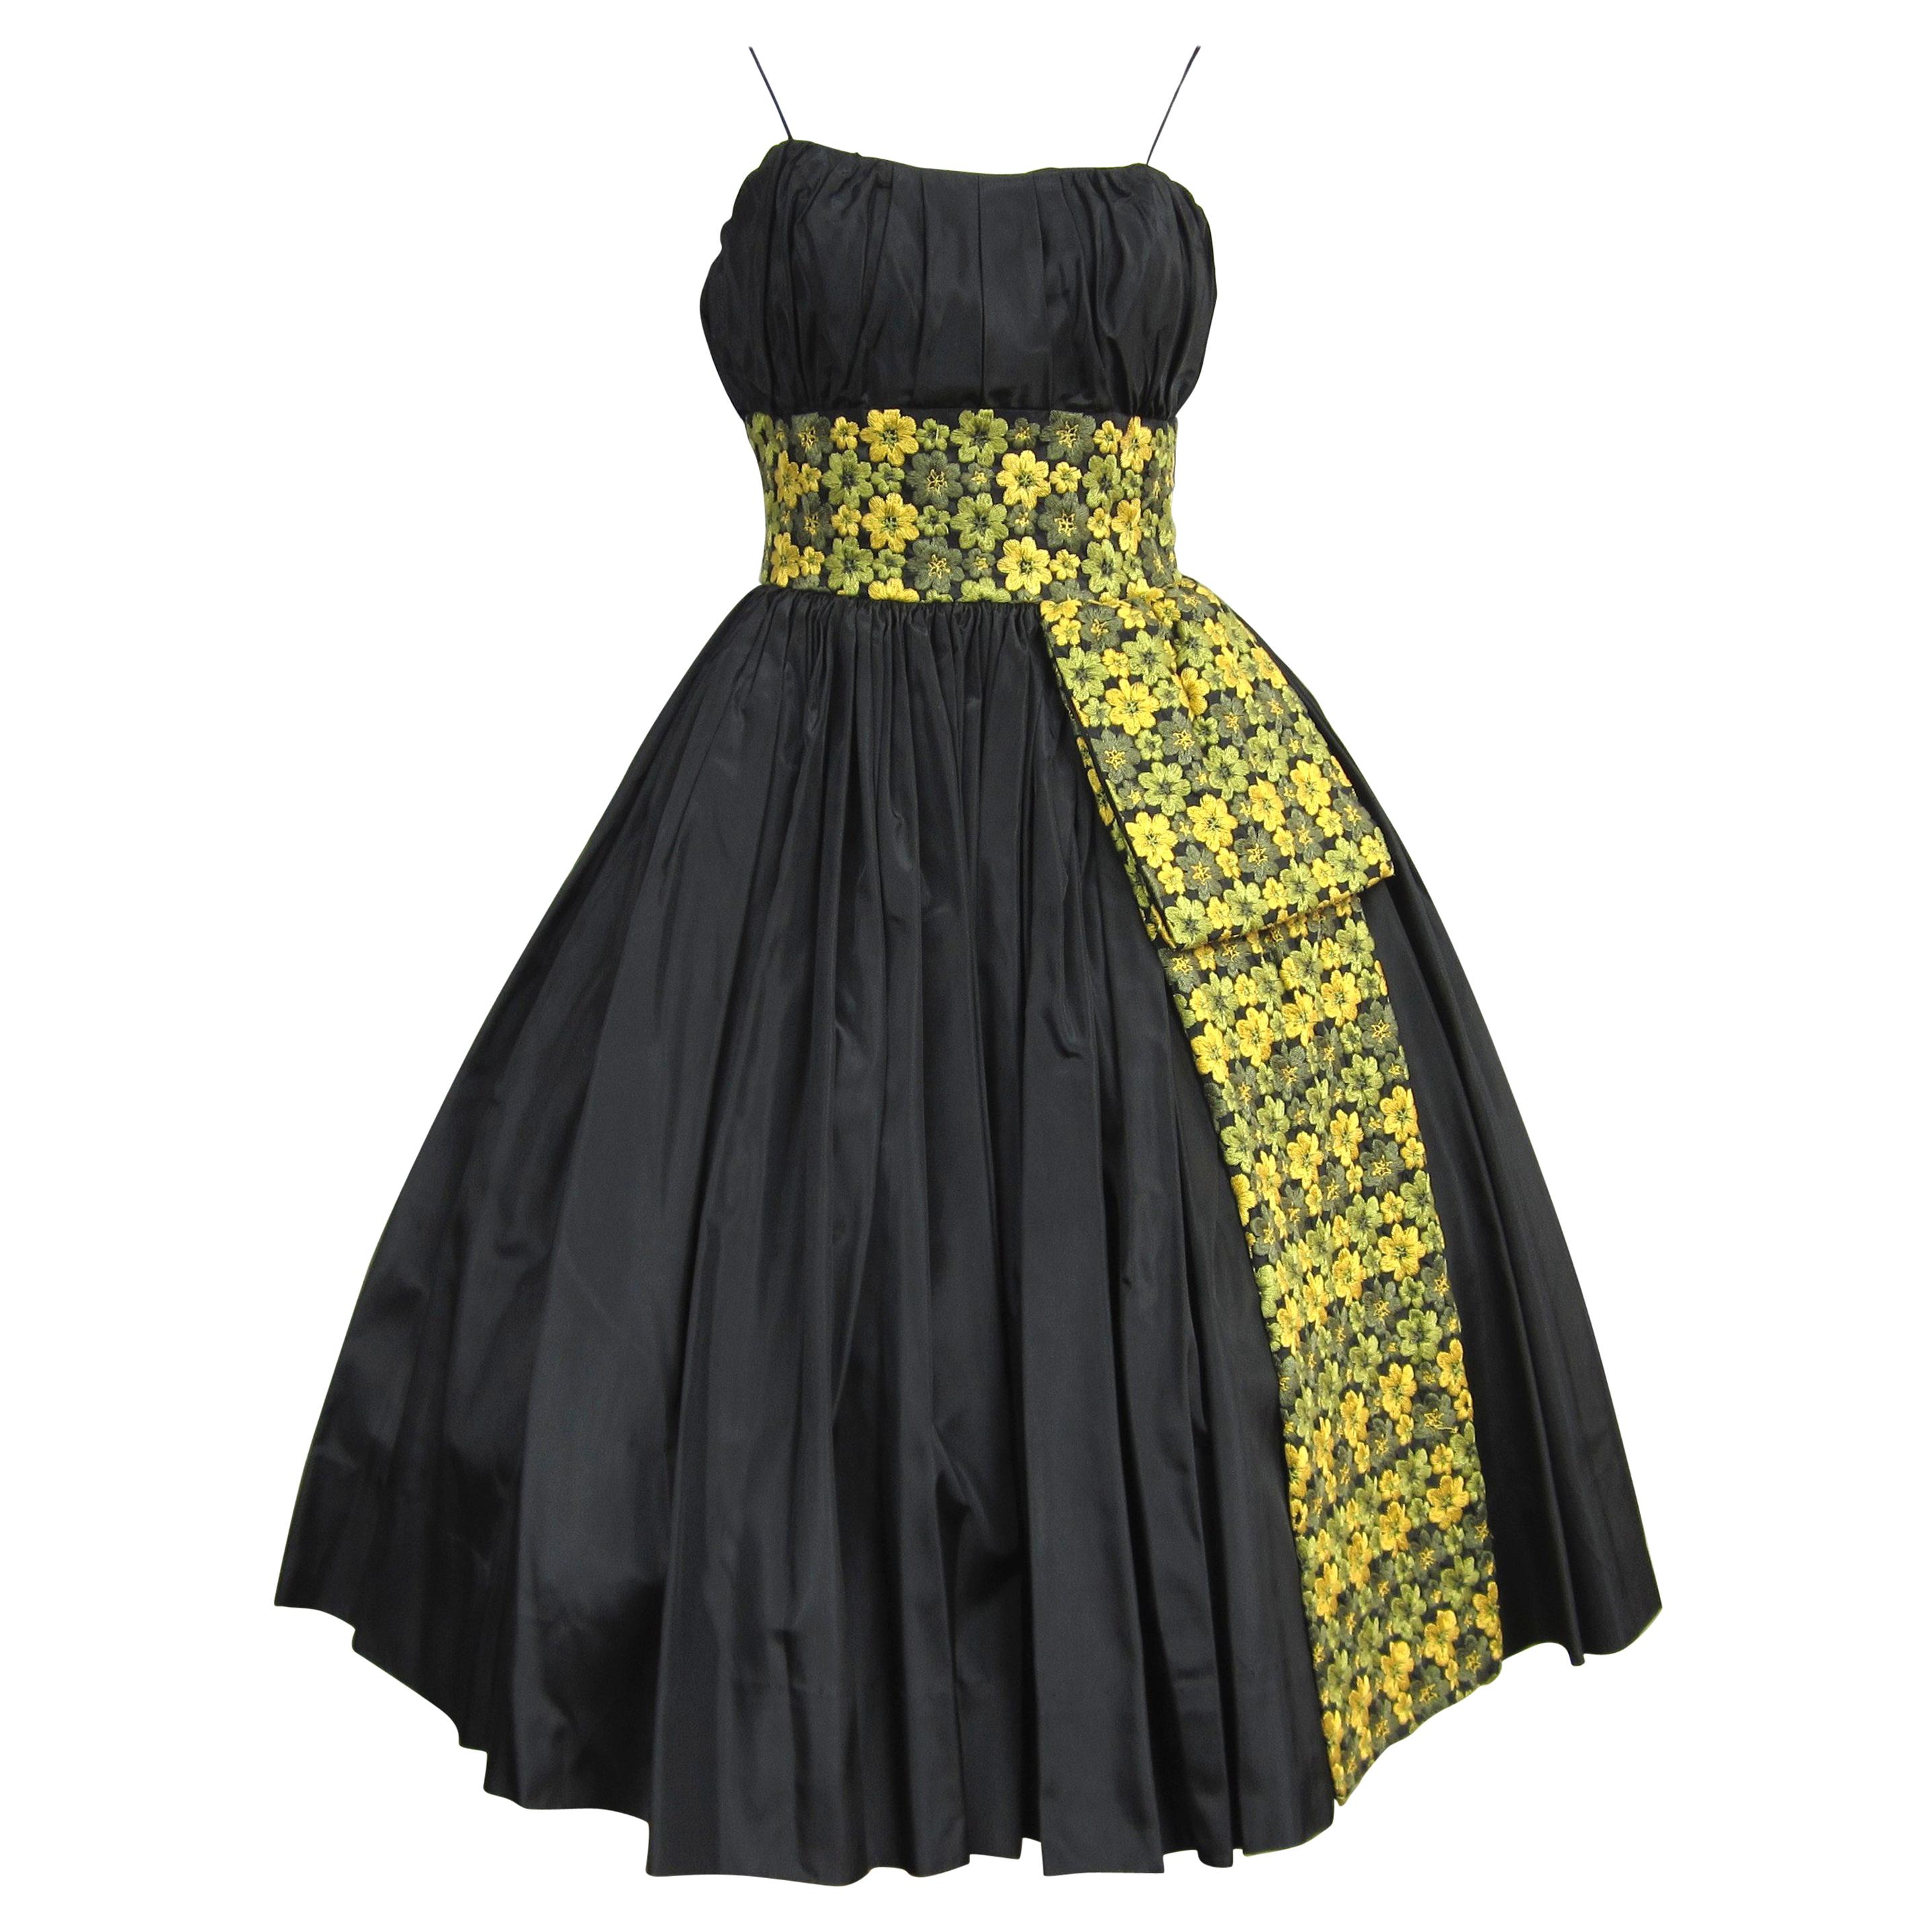  1950s Dress Black Embroidered Shelf Bust Taffeta Party Dress For Sale